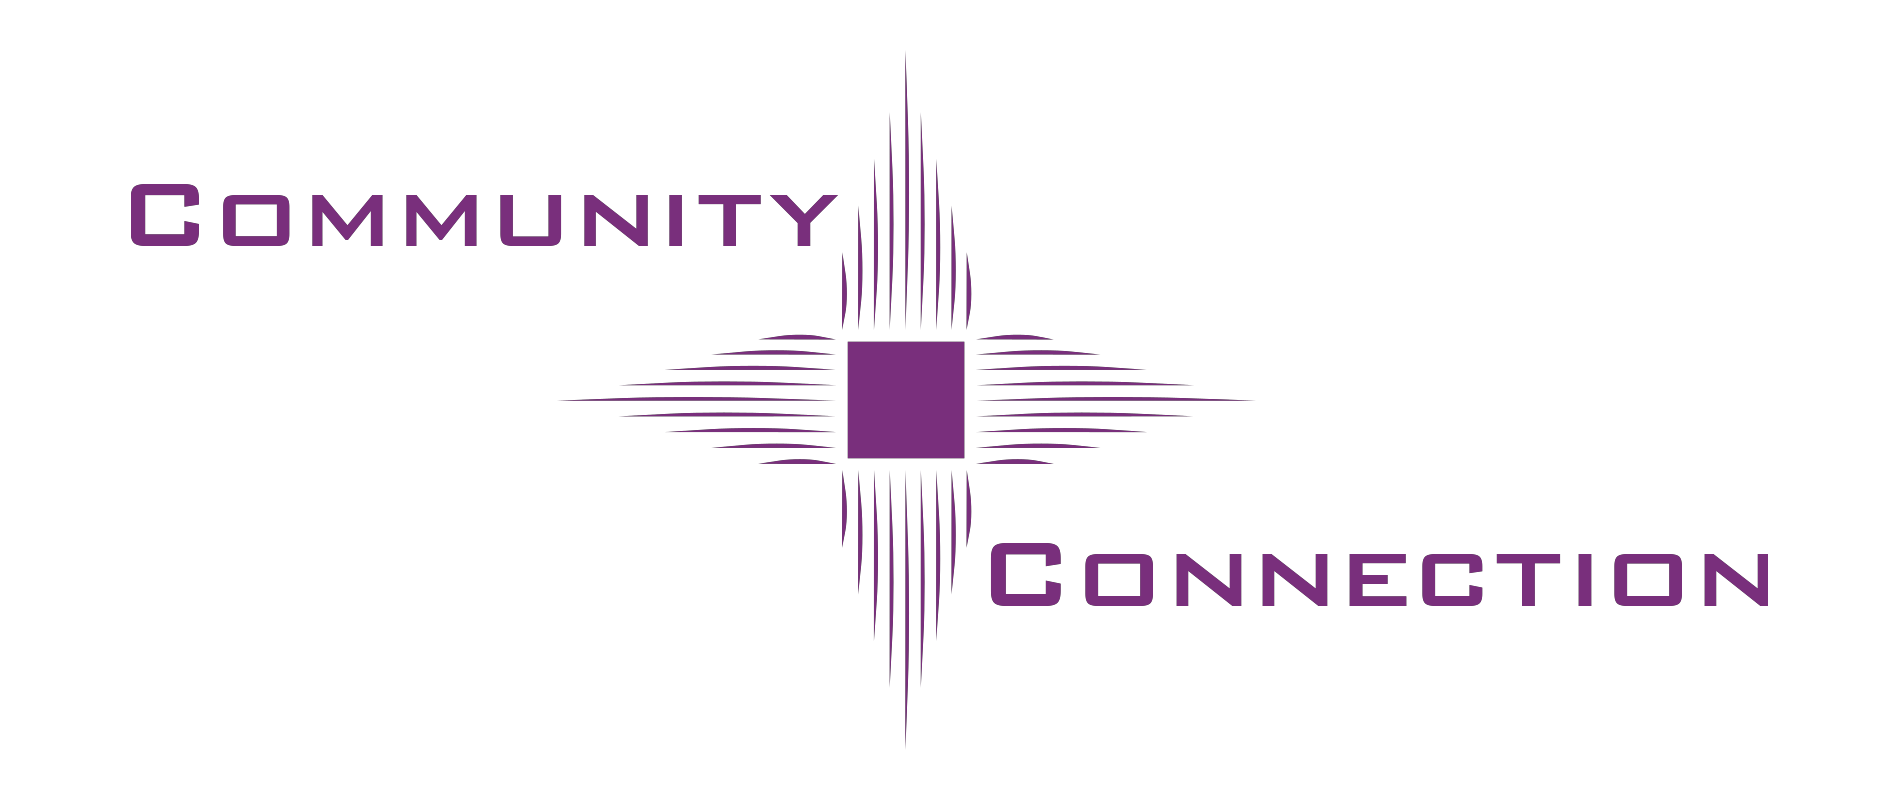 Community Connection